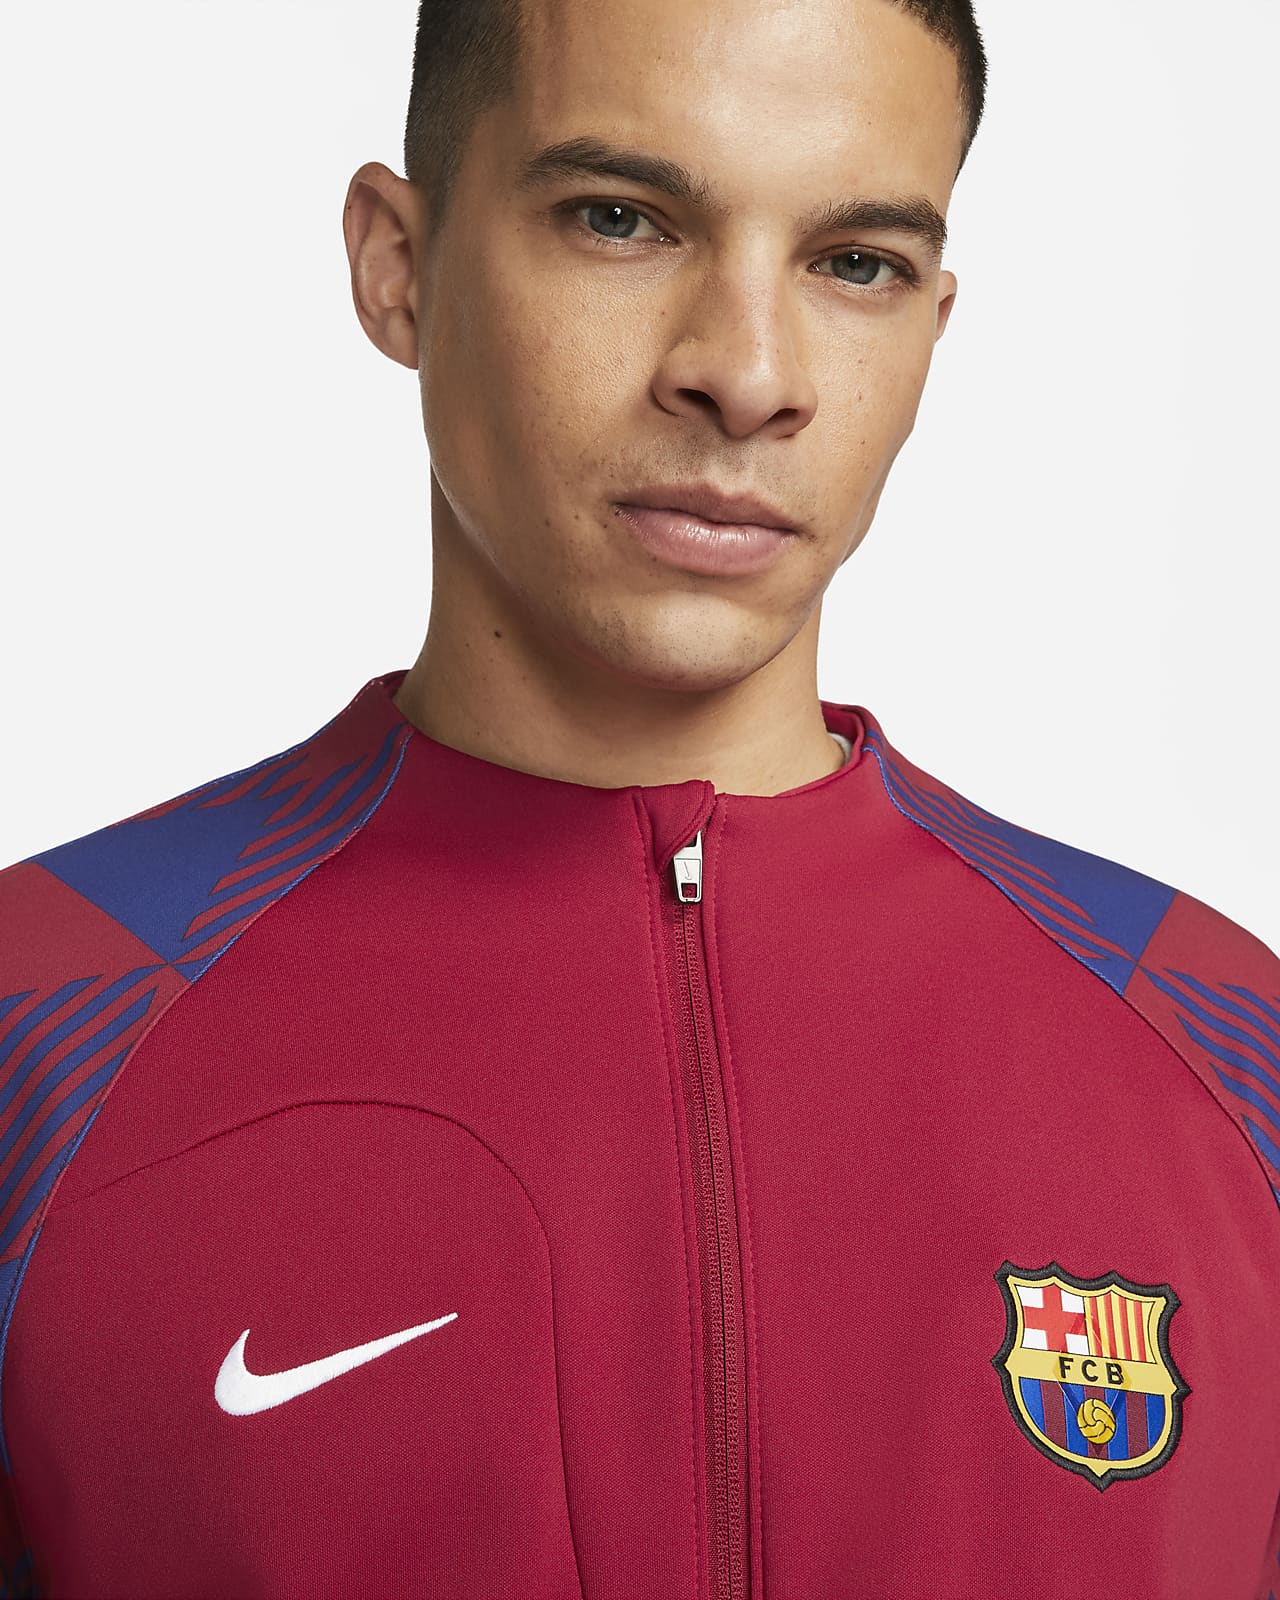 Modales ranura Rayo FC Barcelona Academy Pro Men's Nike Full-Zip Knit Soccer Jacket. Nike JP